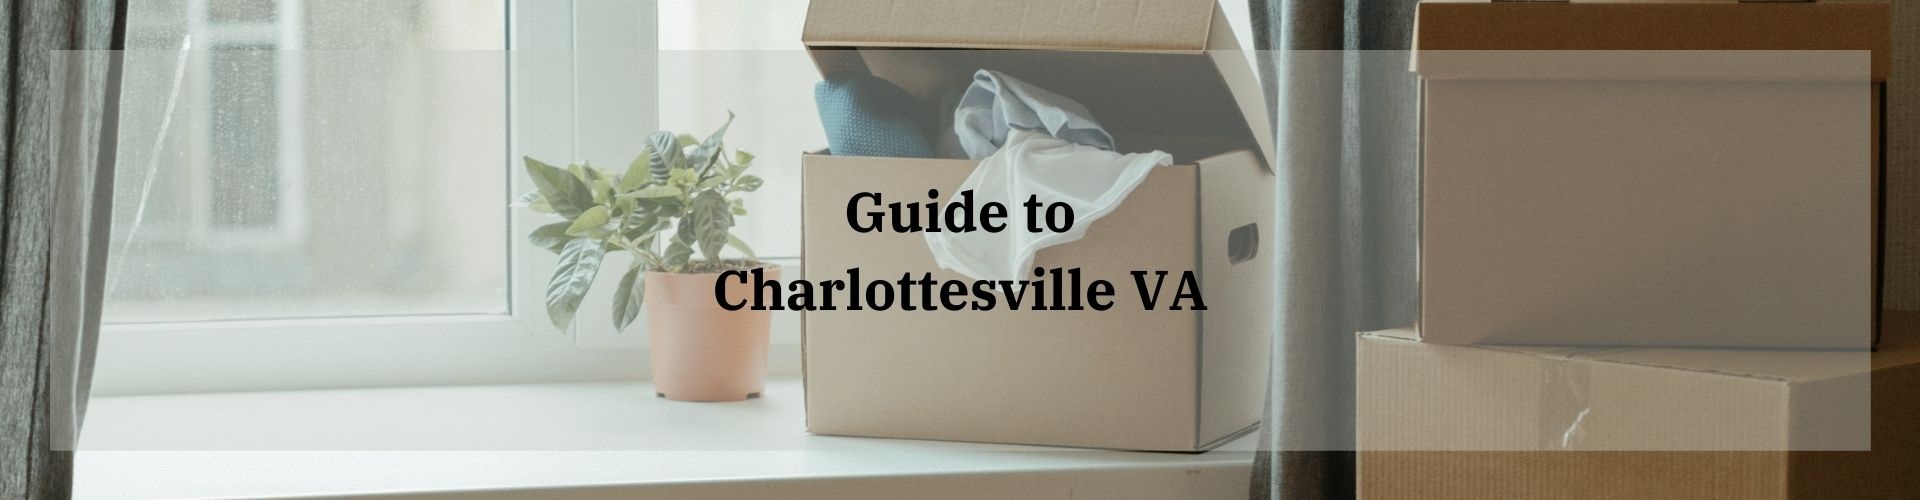 Guide Charlottesville VA